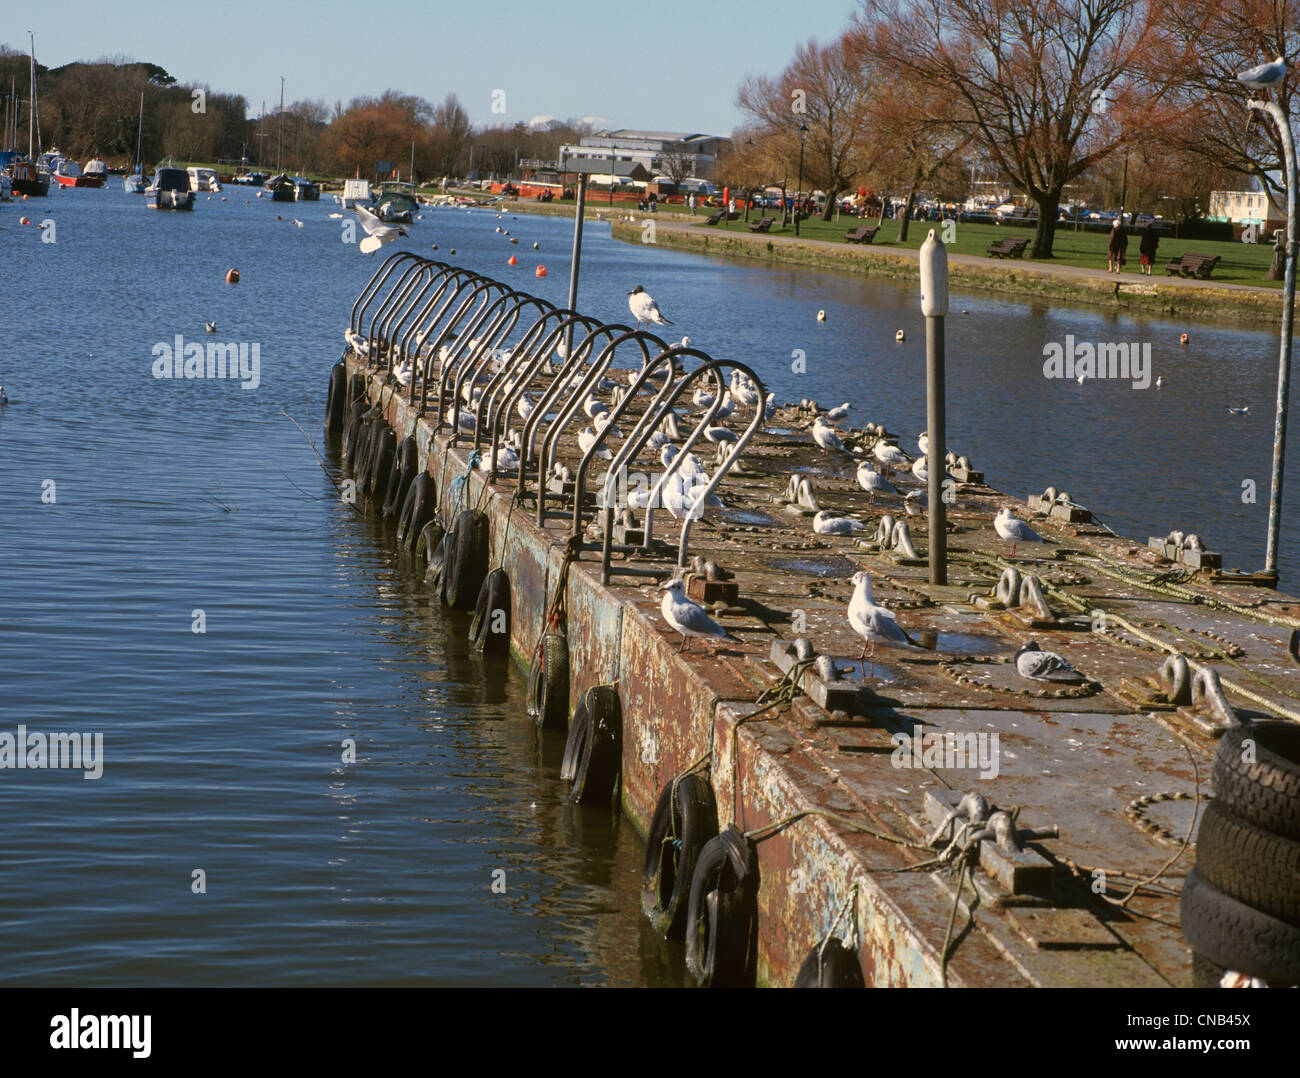 Christchurch Dorset Quayside Seagulls on Jetty Stock Photo